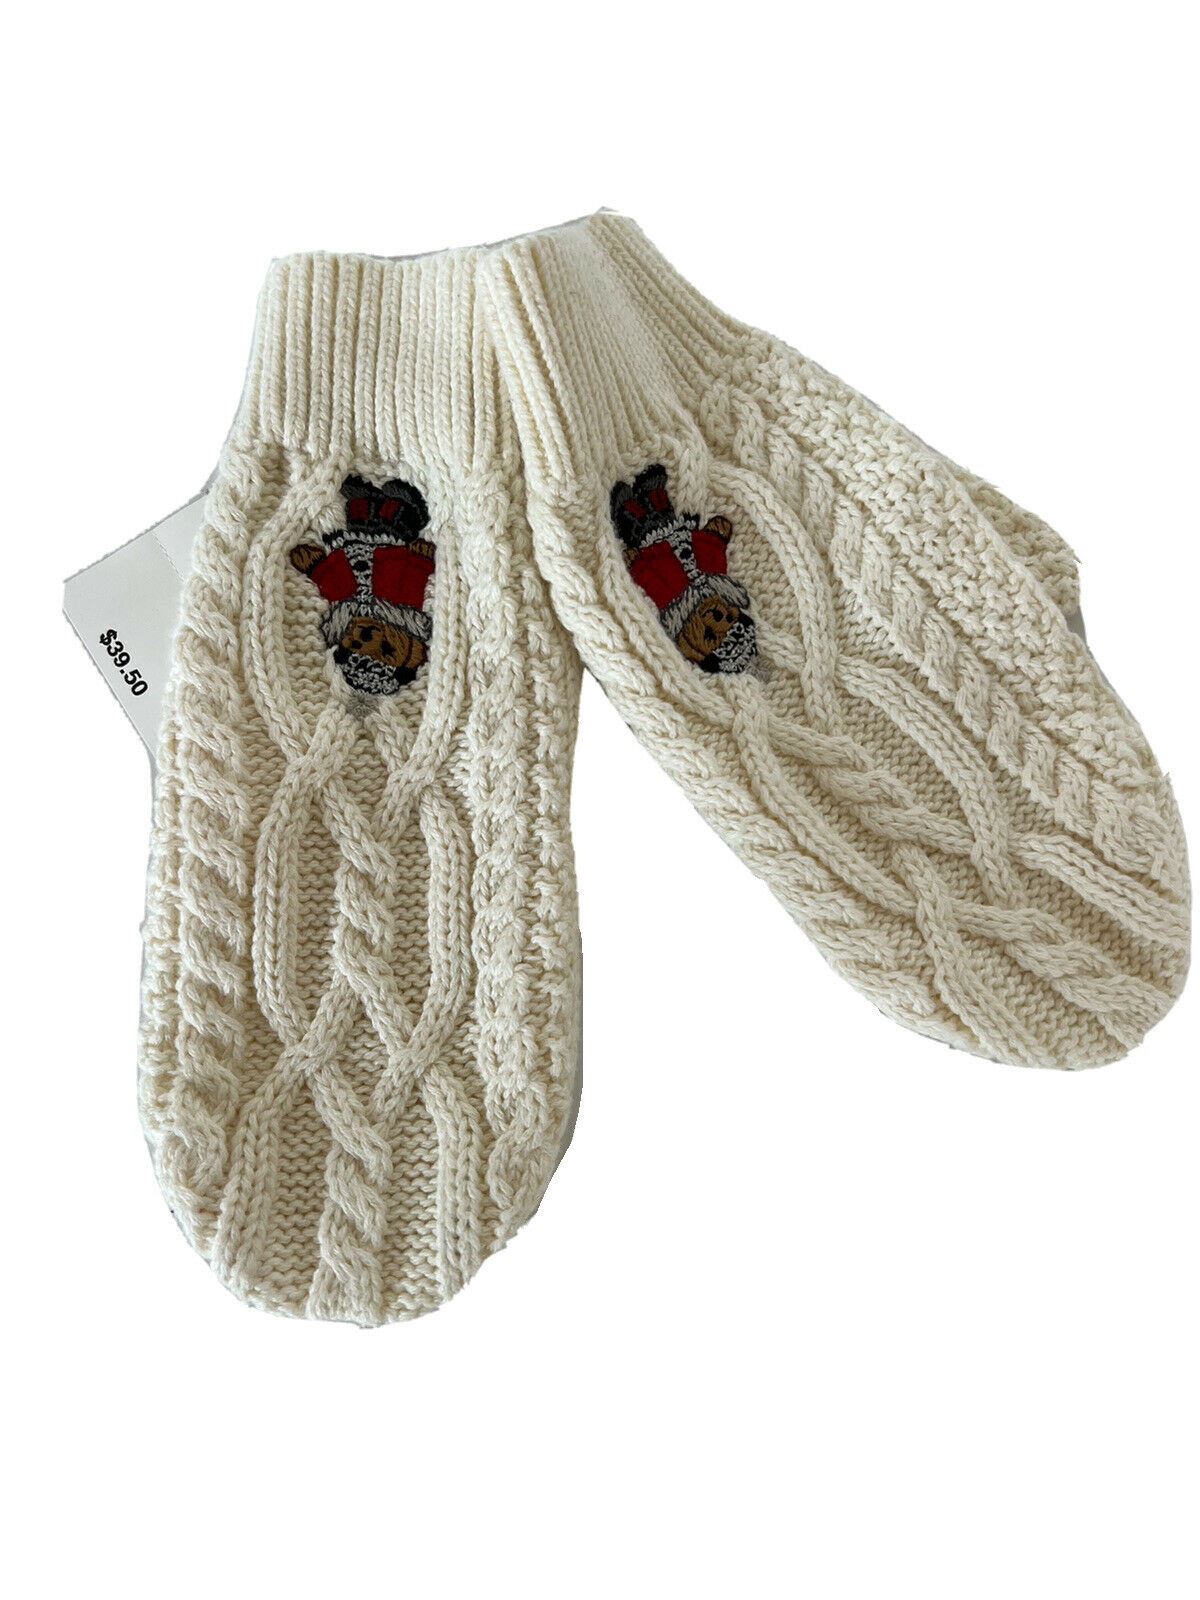 NWT Polo Ralph Lauren Girl's Cotton Gloves Cream Size 4-6